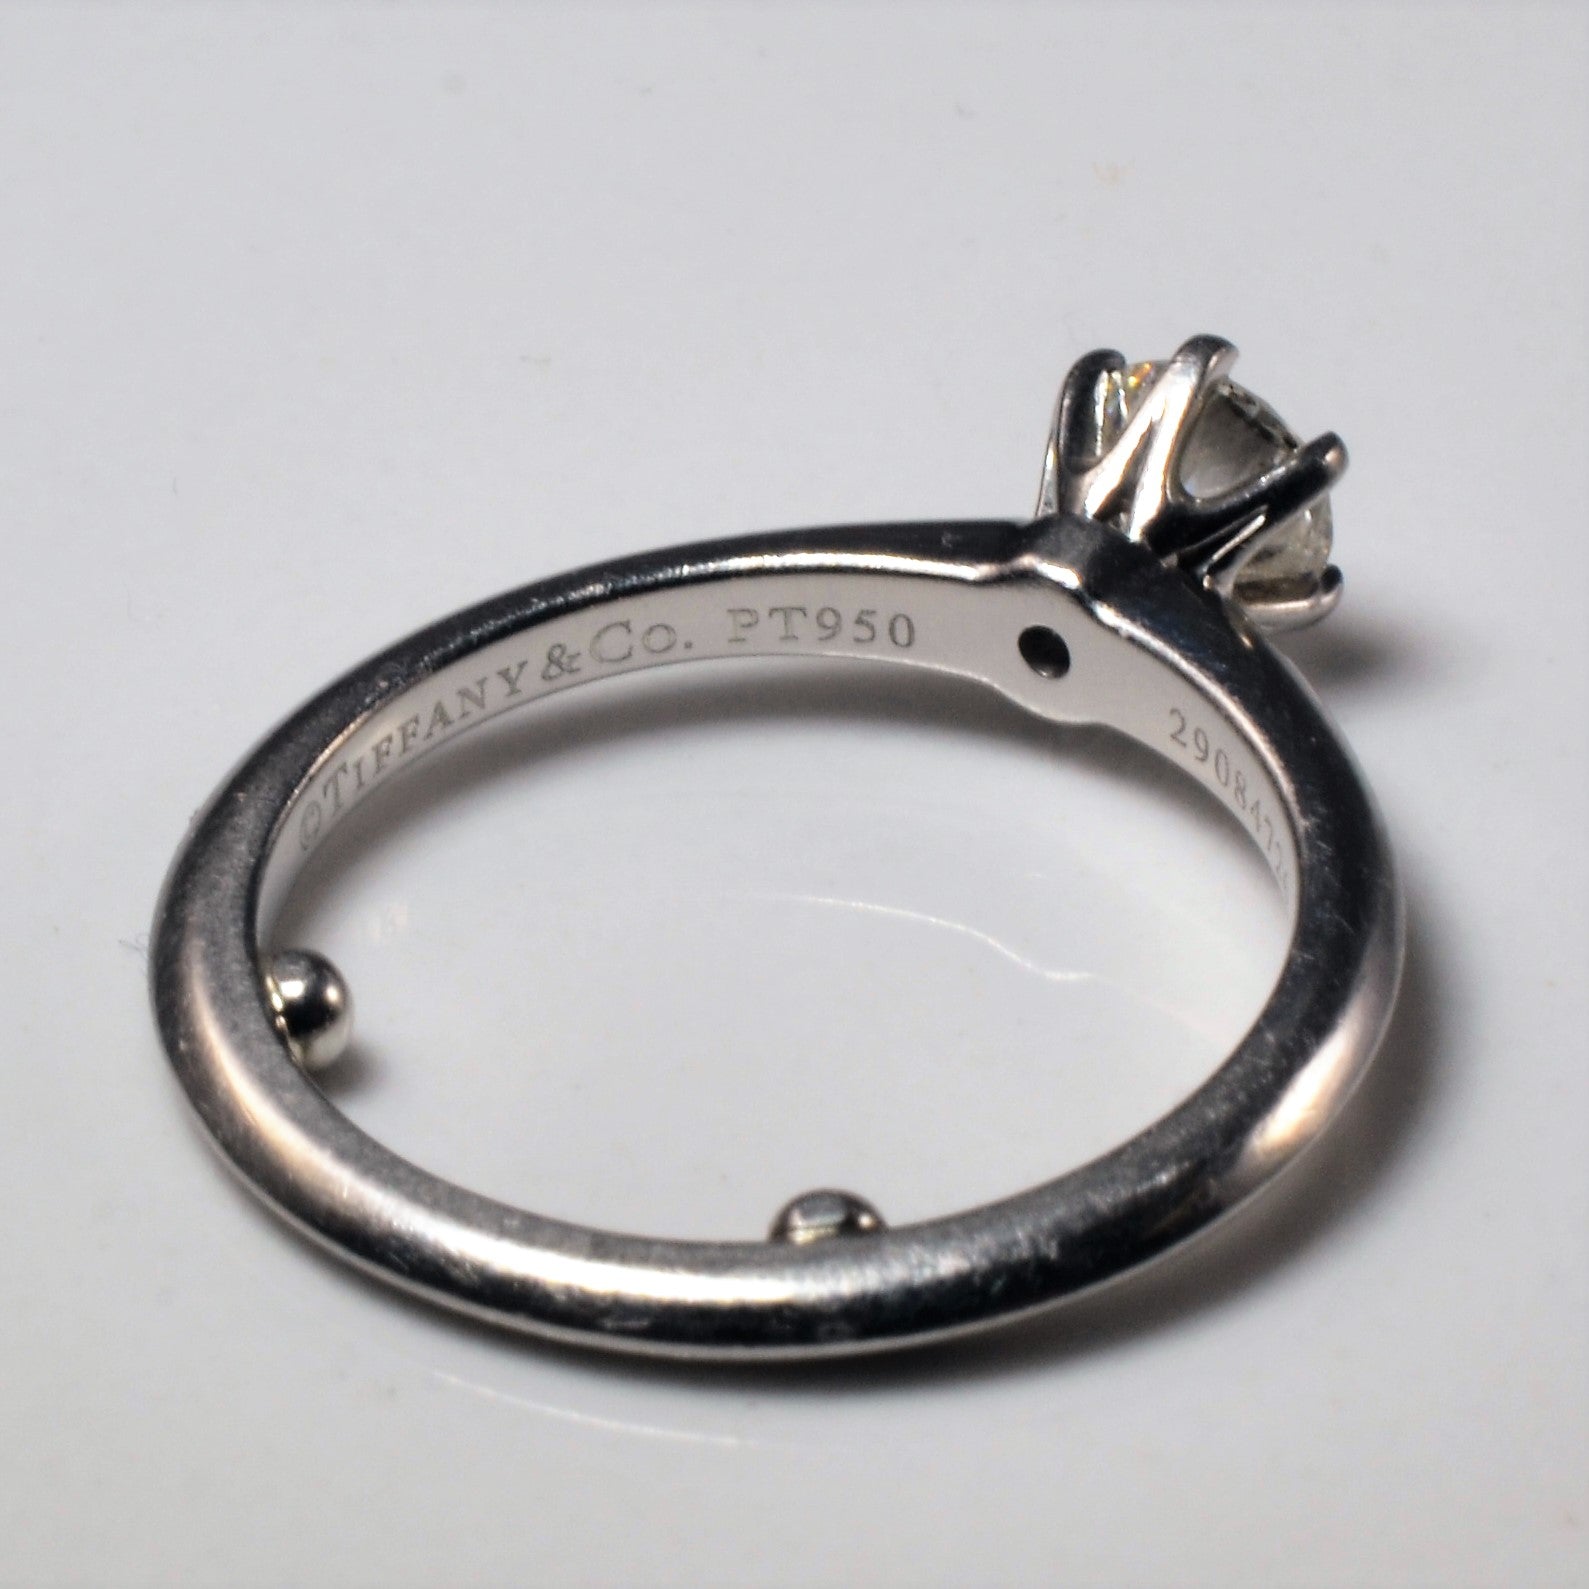 'Tiffany & Co.' Platinum Solitaire Engagement Ring | 0.46ct | SZ 6.25 |